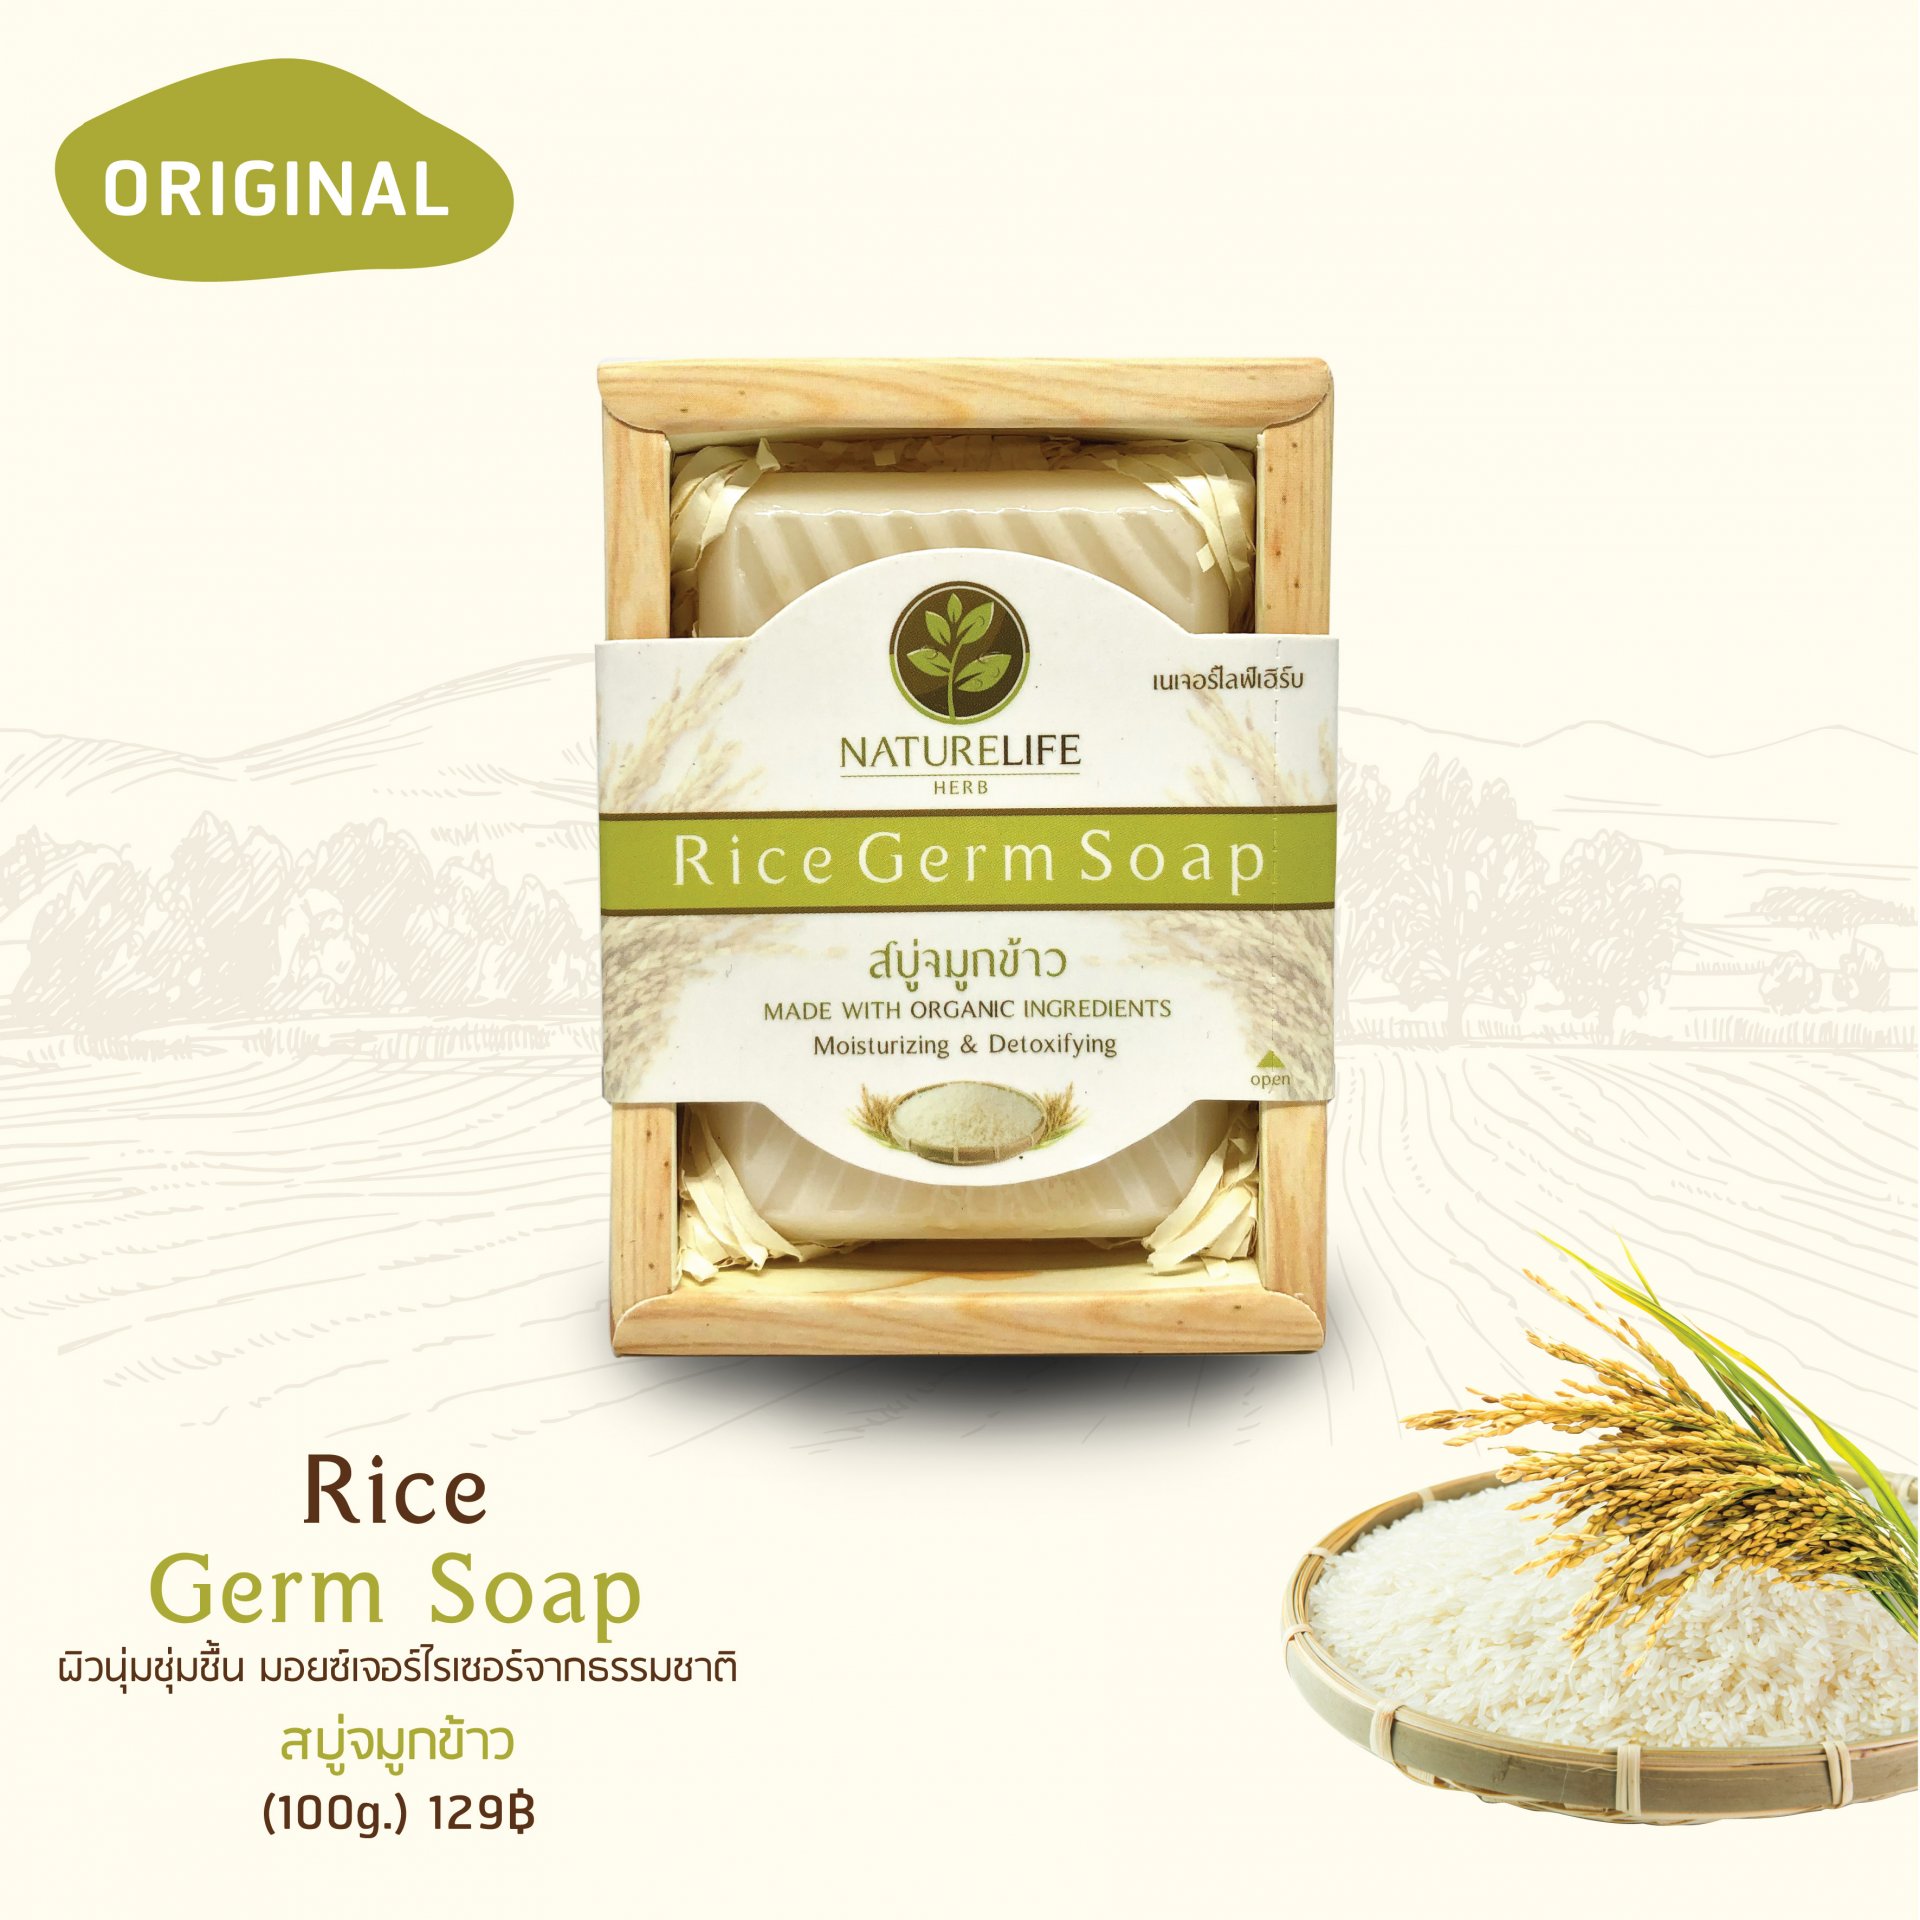 Rice Germ Soap